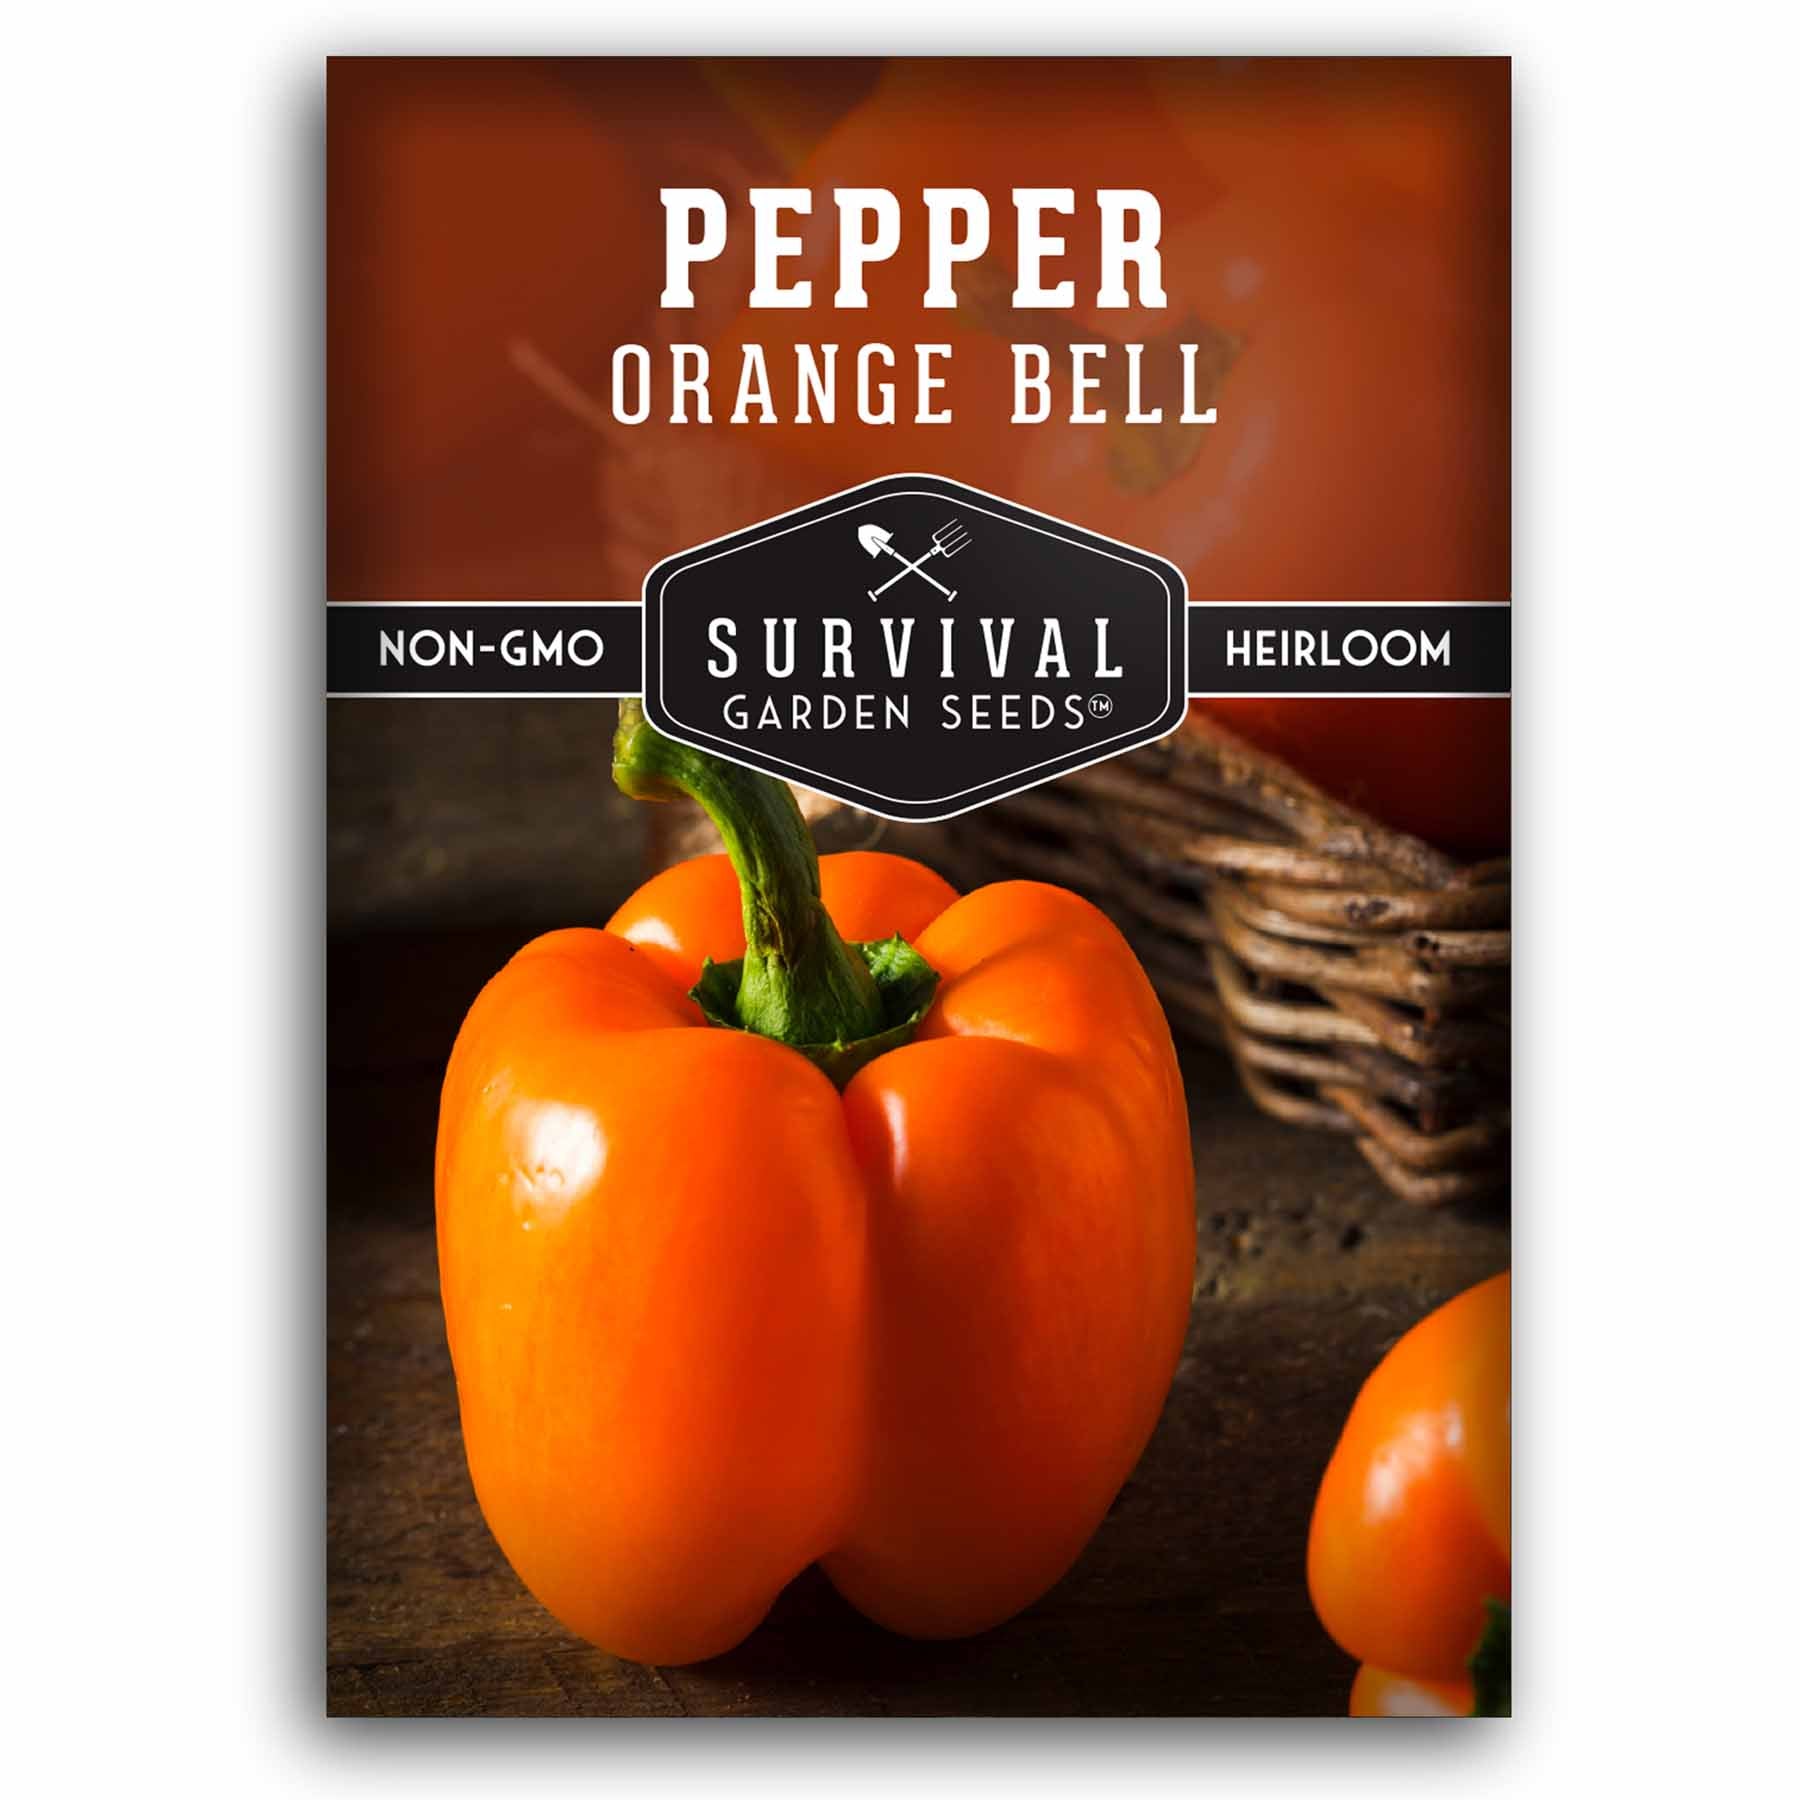 1 packet of Orange Bell Pepper seeds